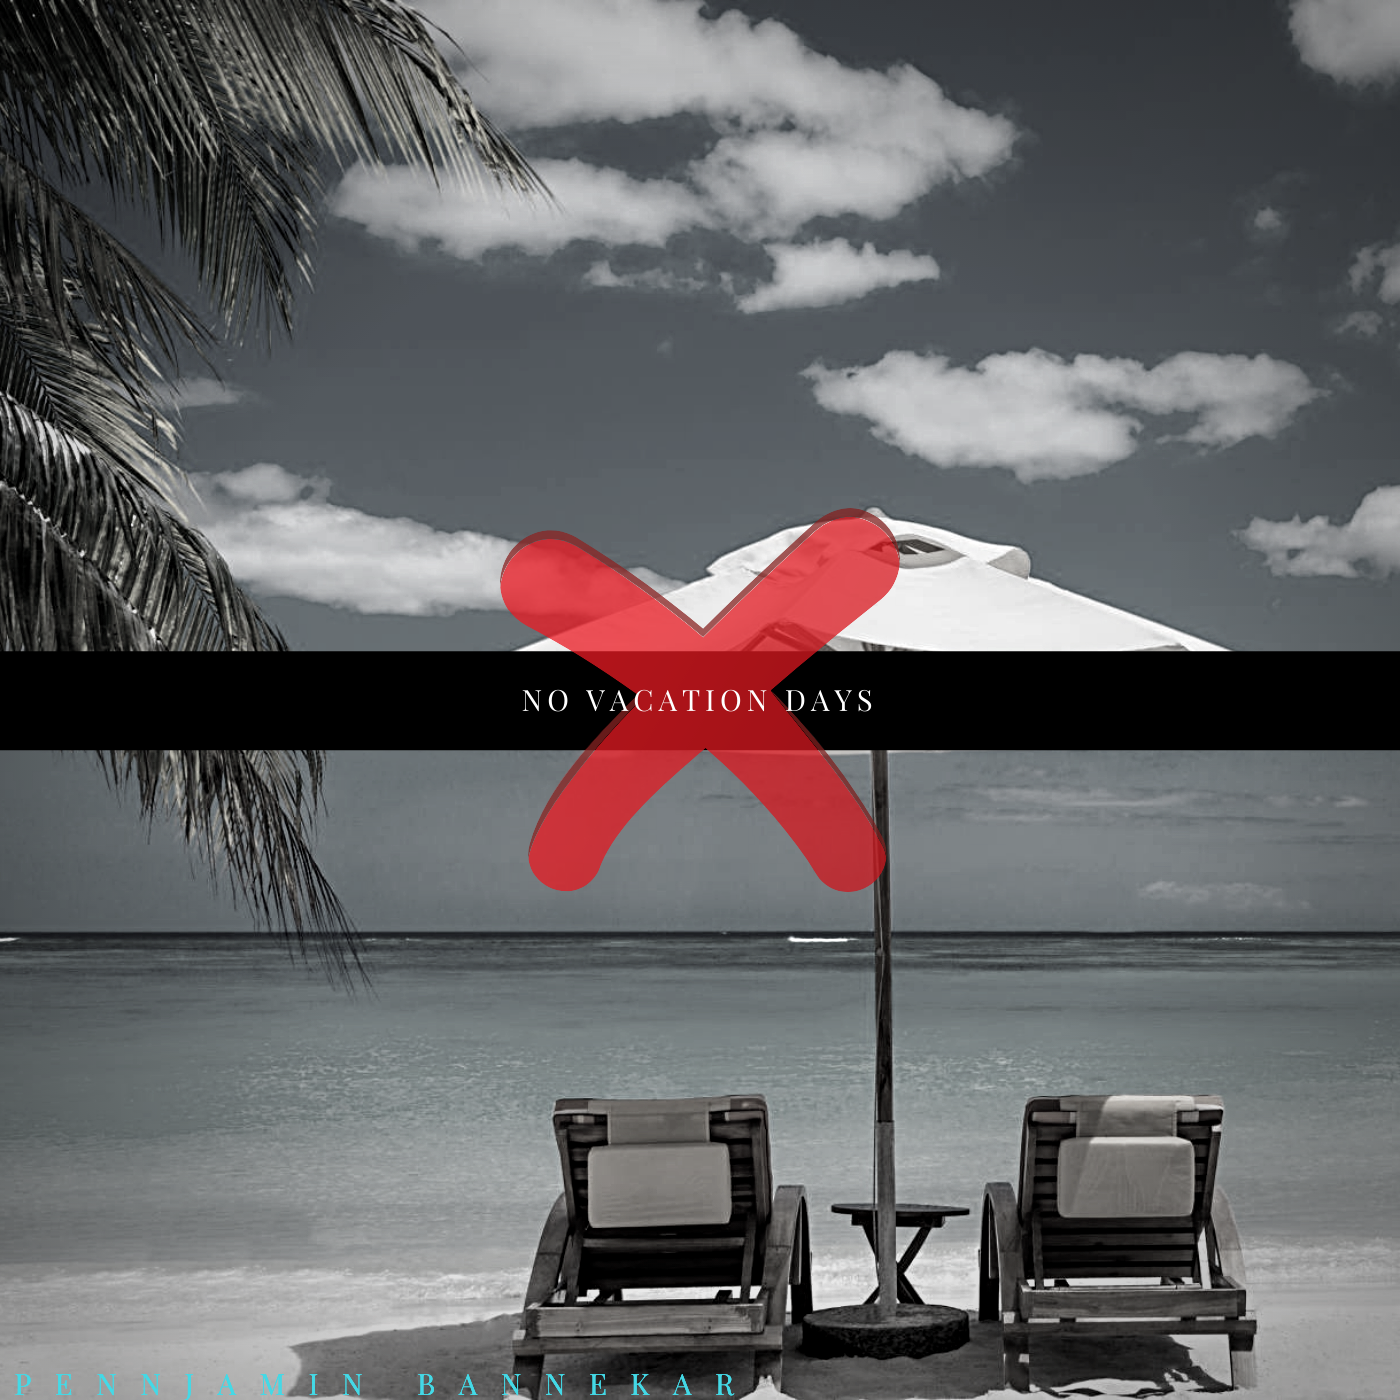 [New Single] No Vacation Days – Pennjamin Bannekar @PennBannekar